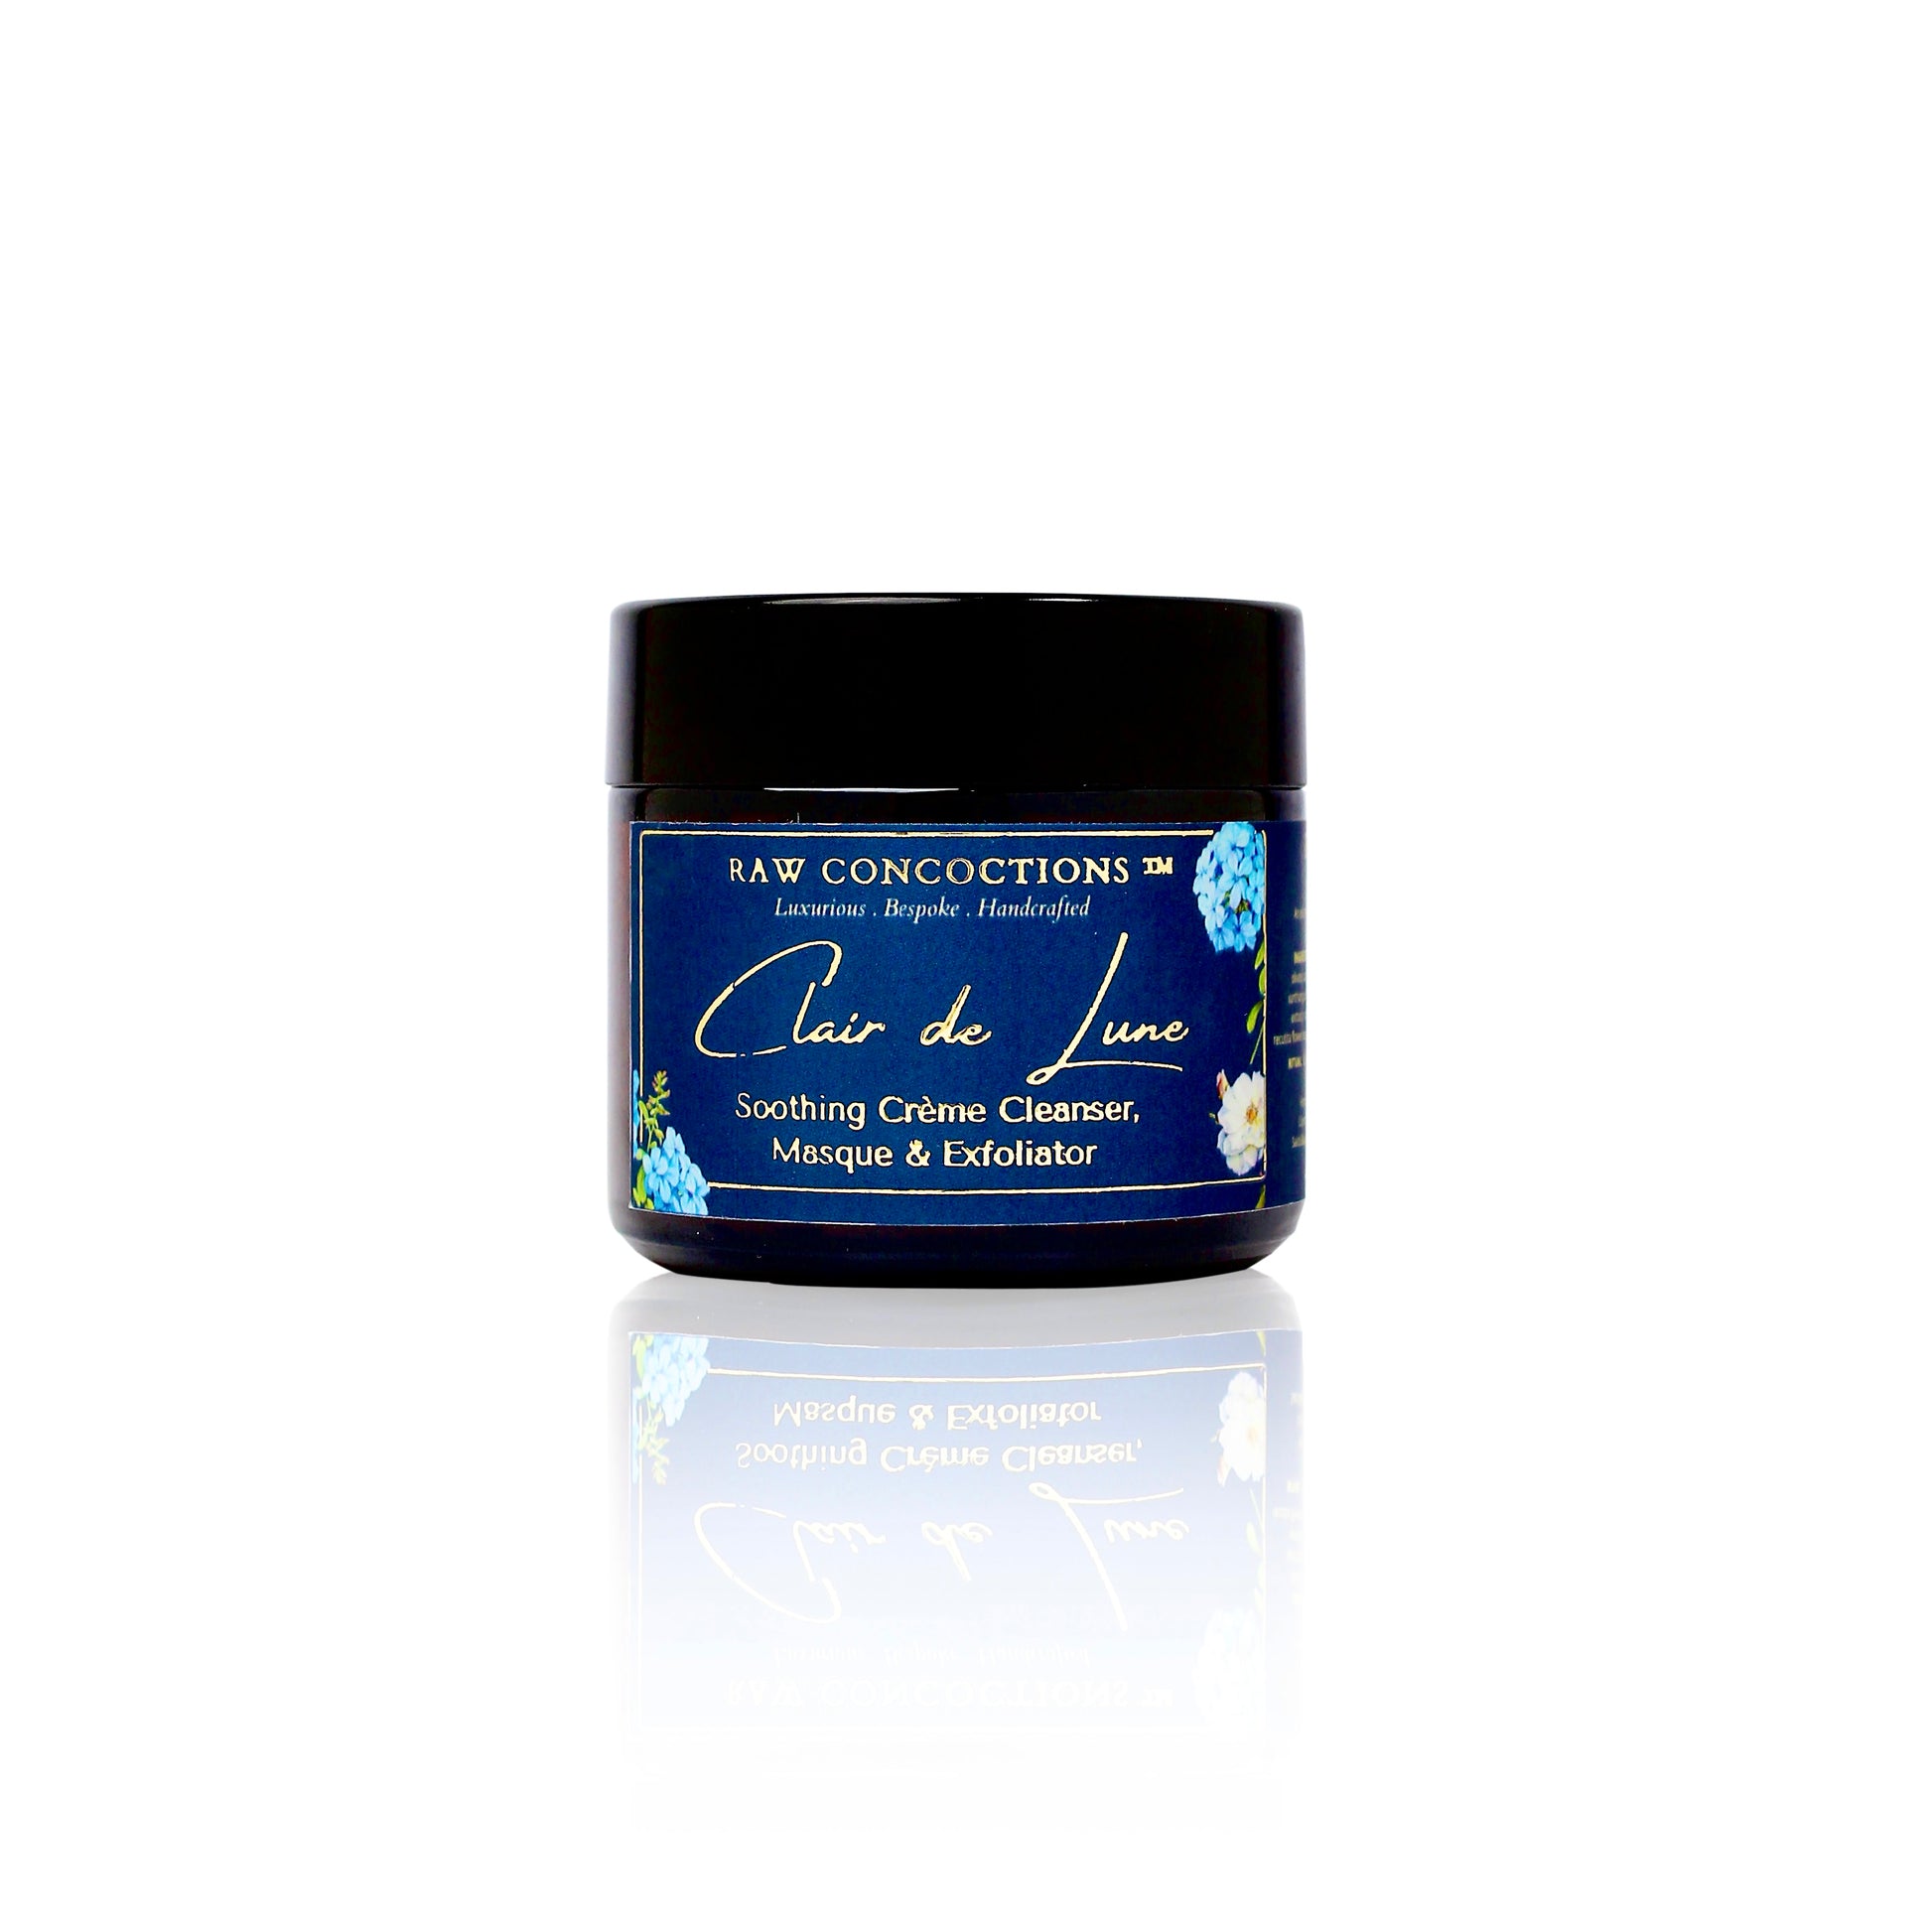 CLAIR DE LUNE - 3 in 1 Crème cleanser, Masque & Exfoliator - Raw Concoctions